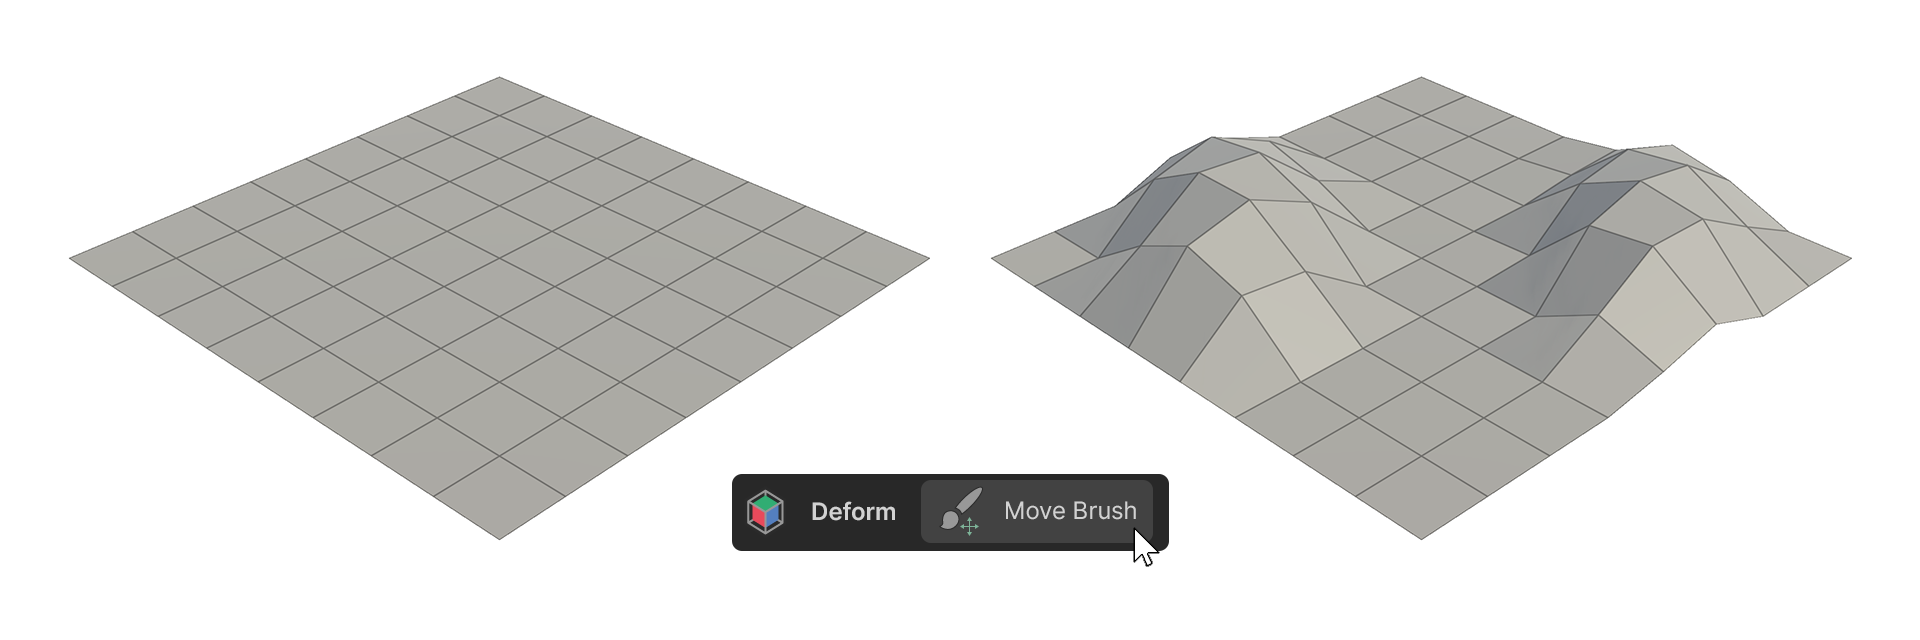 basic_Modeling_Deform_MoveBrush